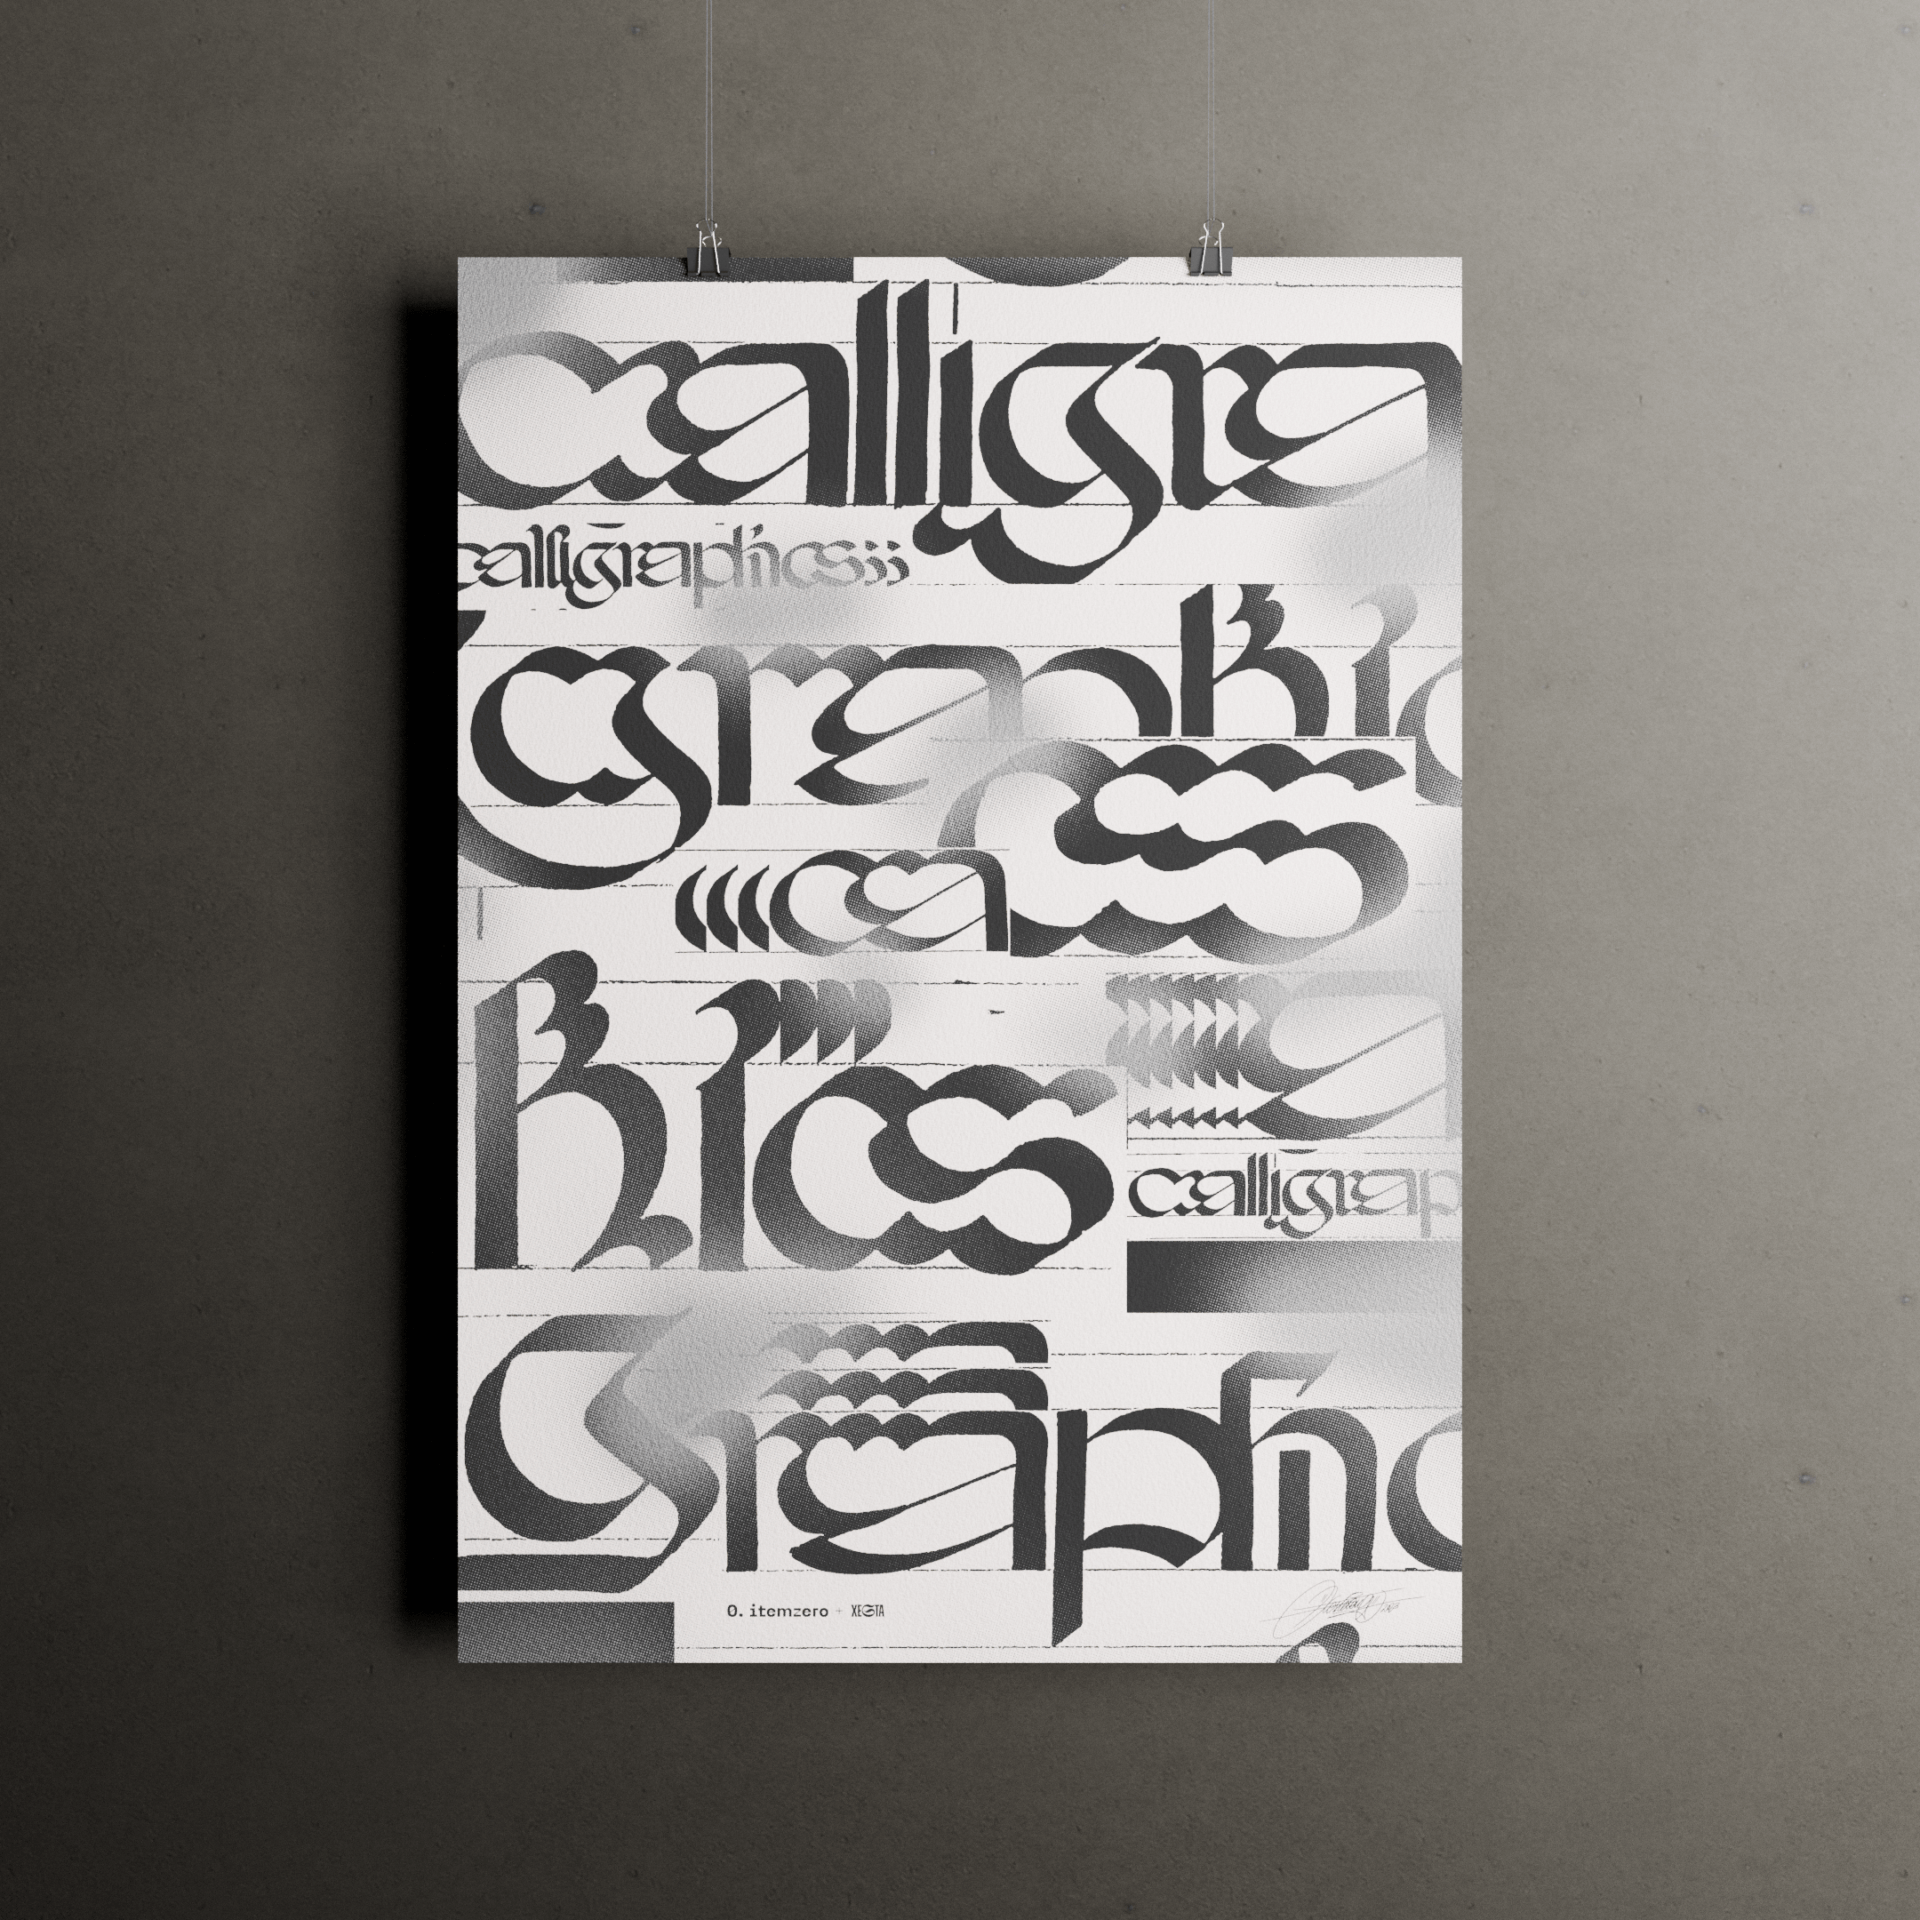 poster 022 - Poster — Rotunda Calligraphics - Shop → 0. itemzero